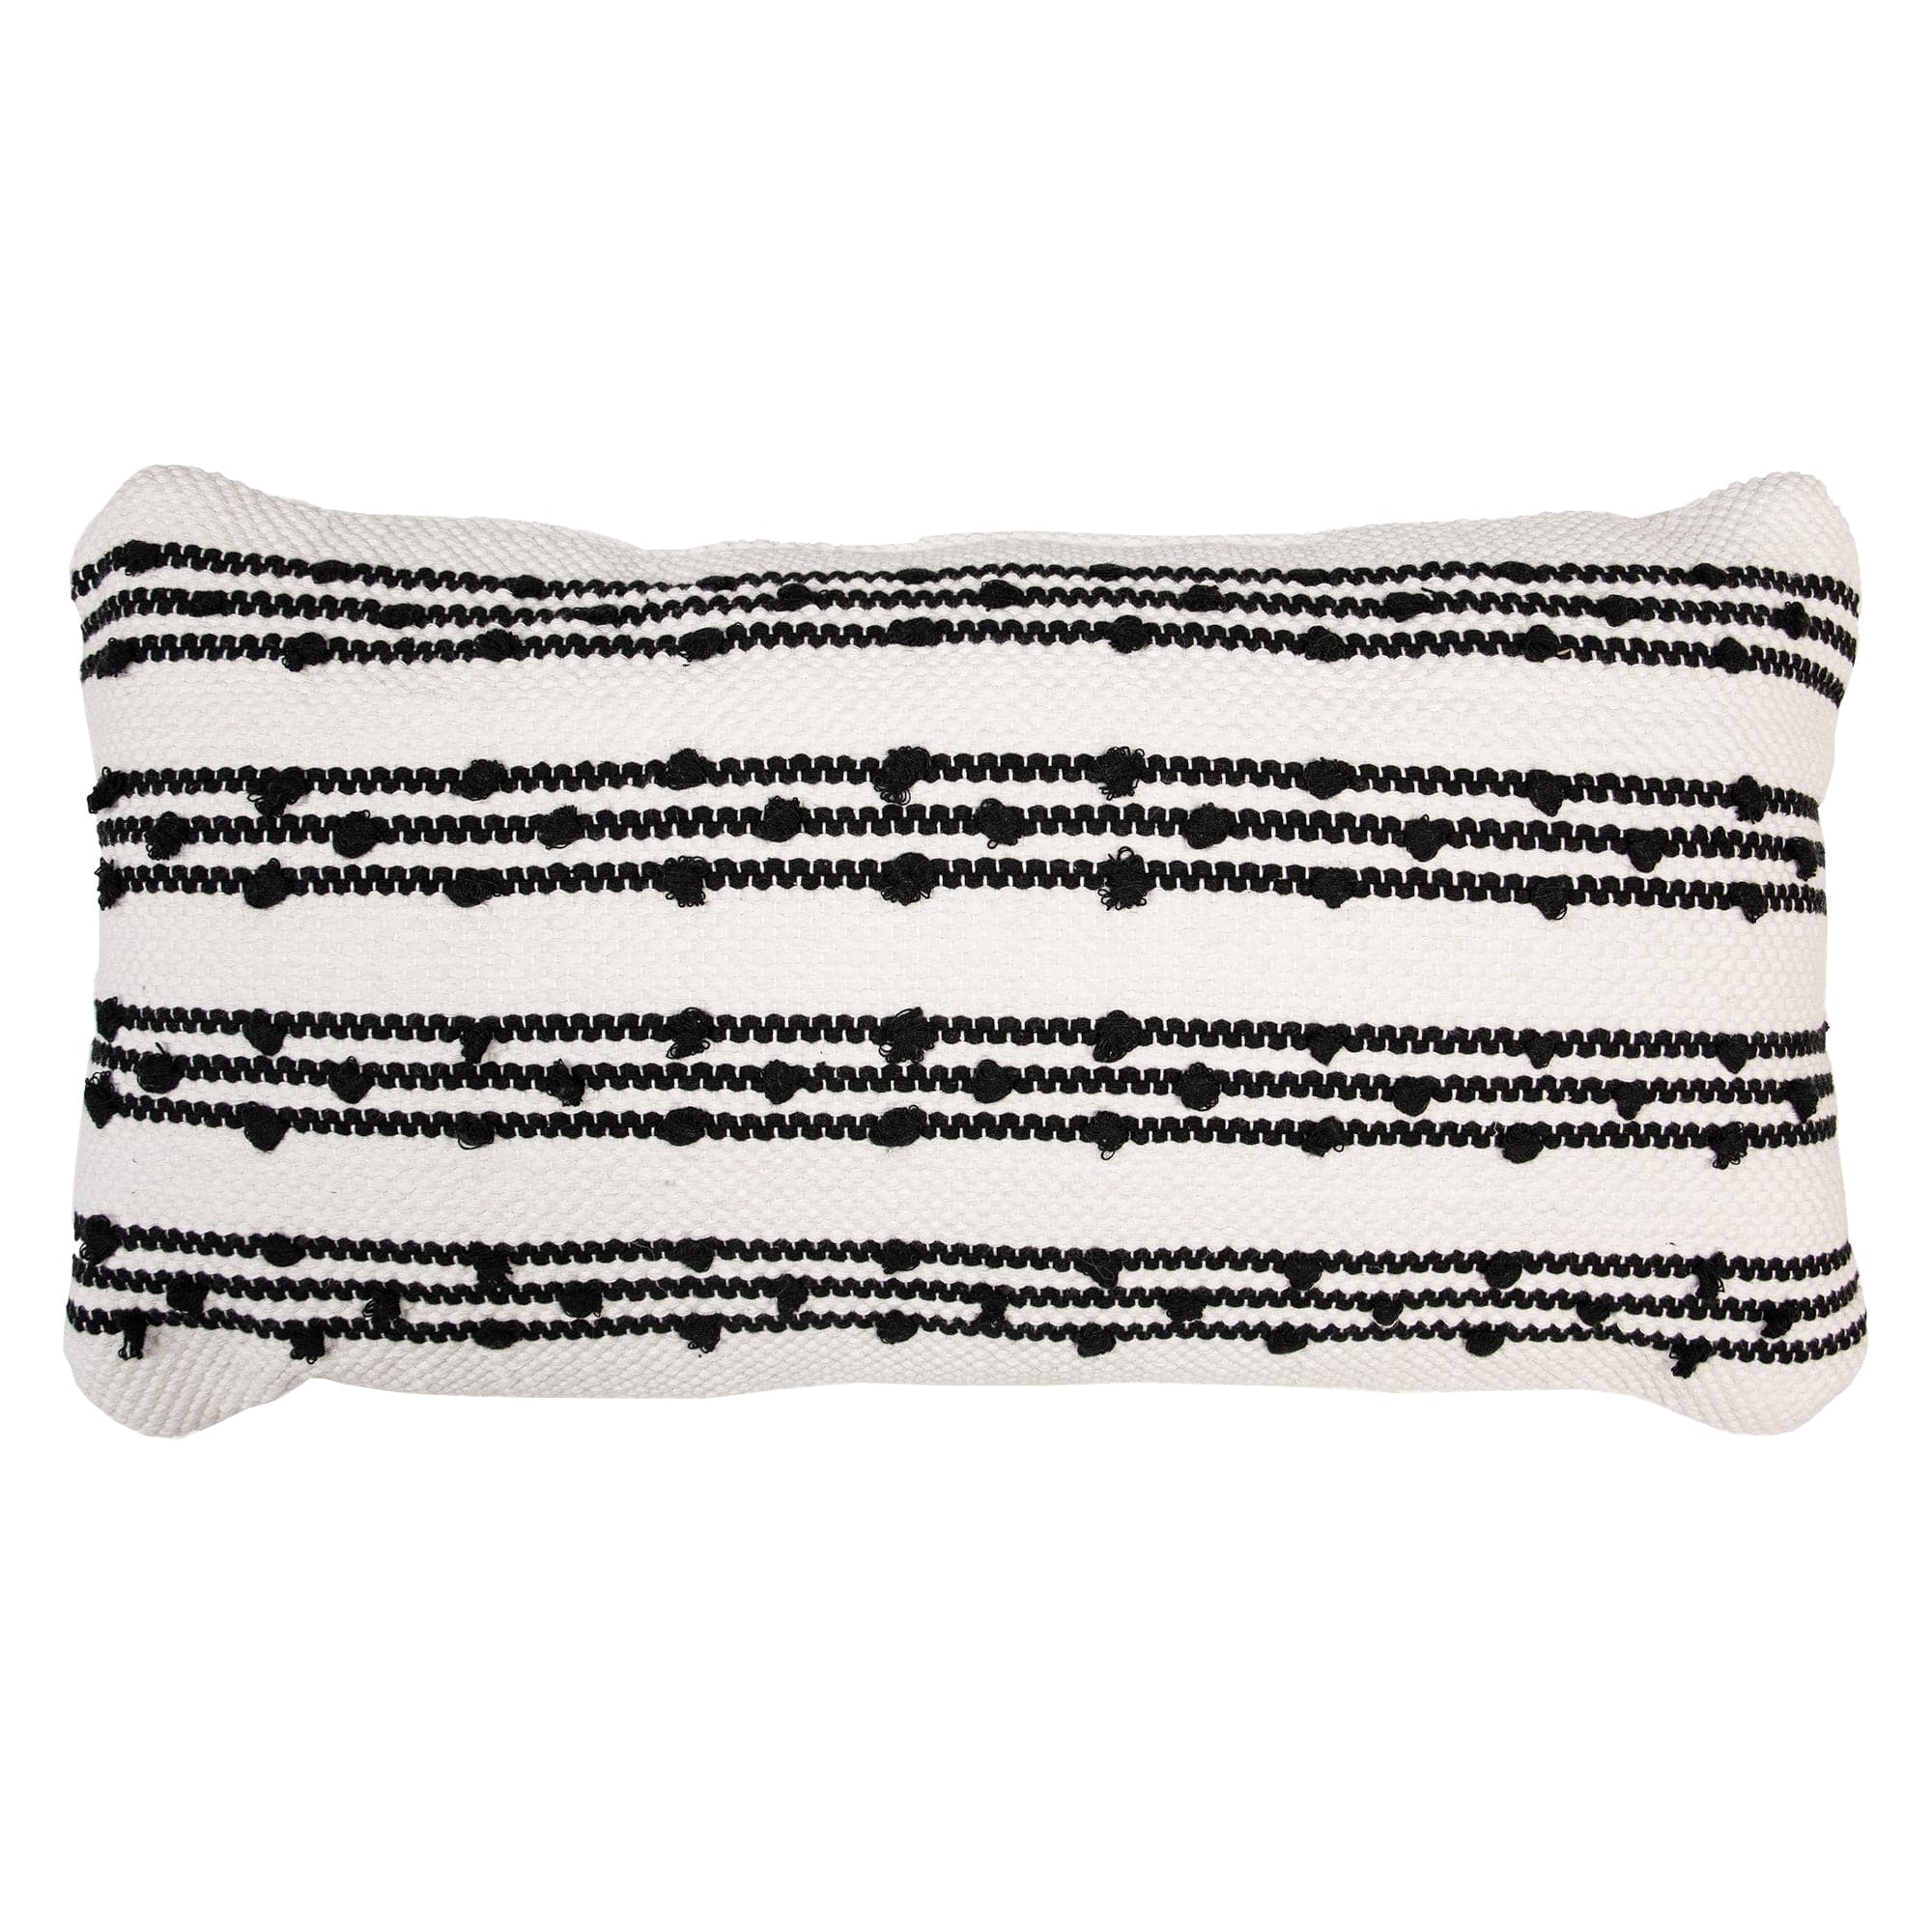 White Minimalist Solid Color Block Spring Summer Rectangular Pillow